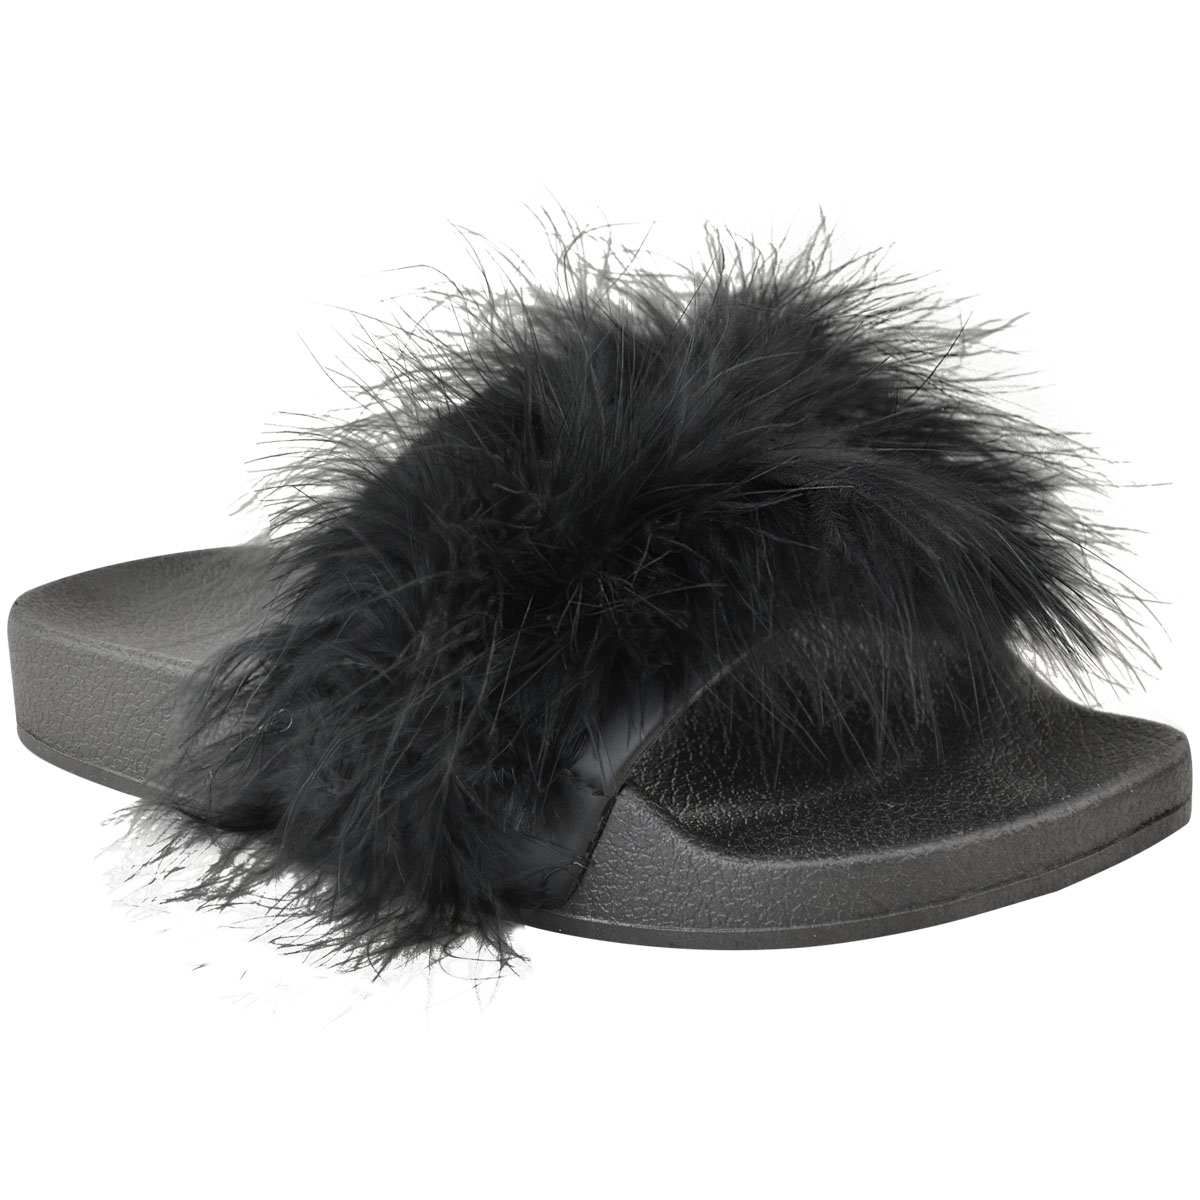 Details about   Ladies Women's Flat Fur Fluffy Sliders Slippers Comfy Sandals Flip Flop Shoes